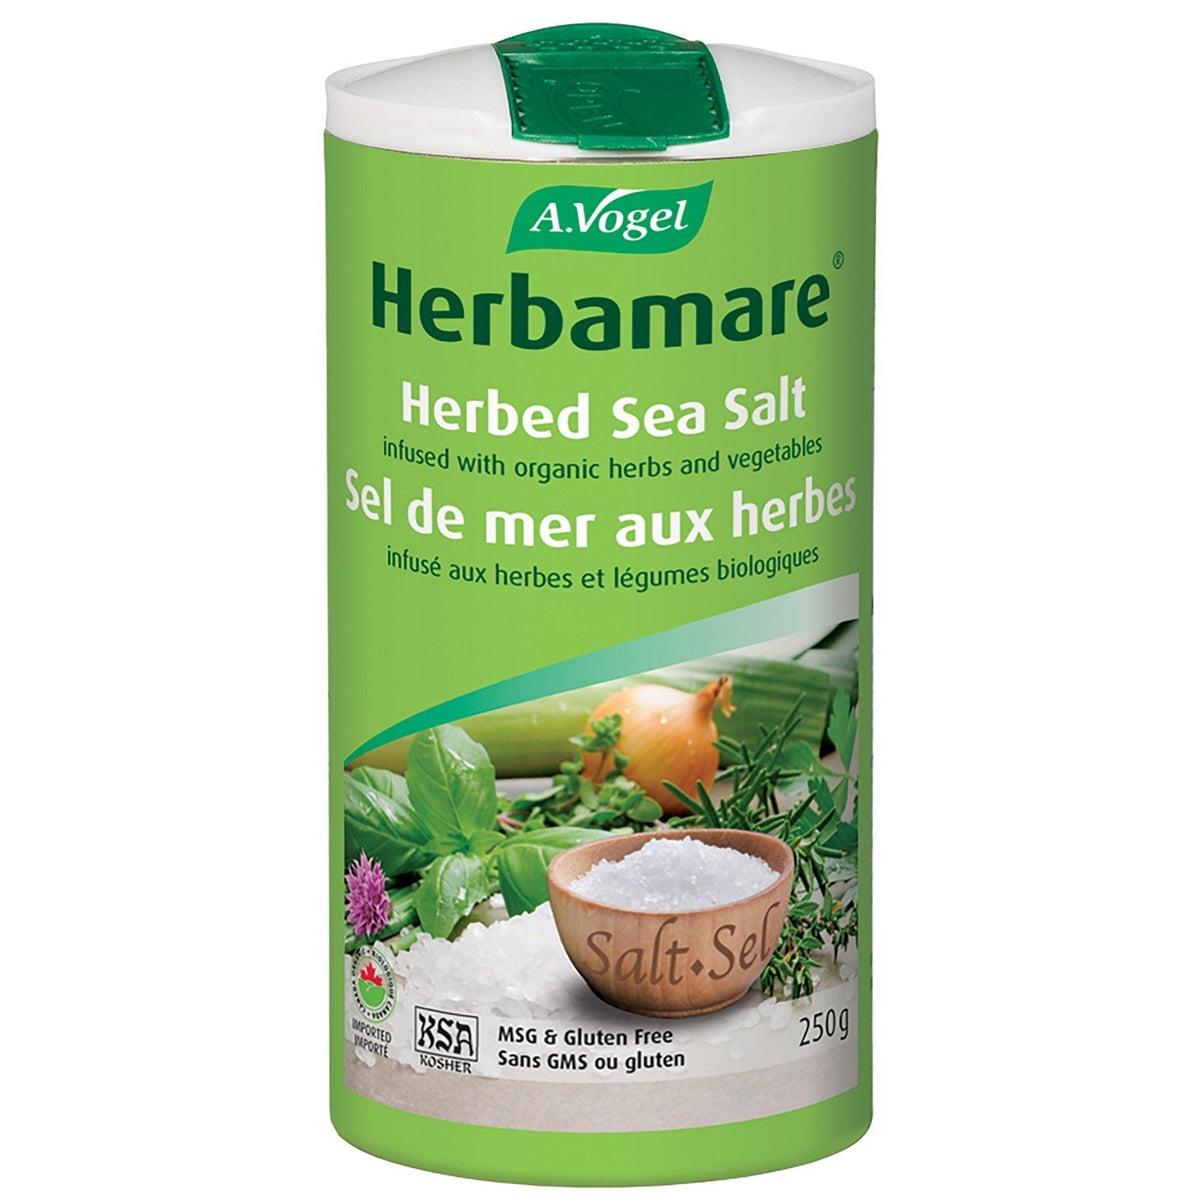 A. Vogel Organic Herbamare Herbed Sea Salt 250g Food Items at Village Vitamin Store